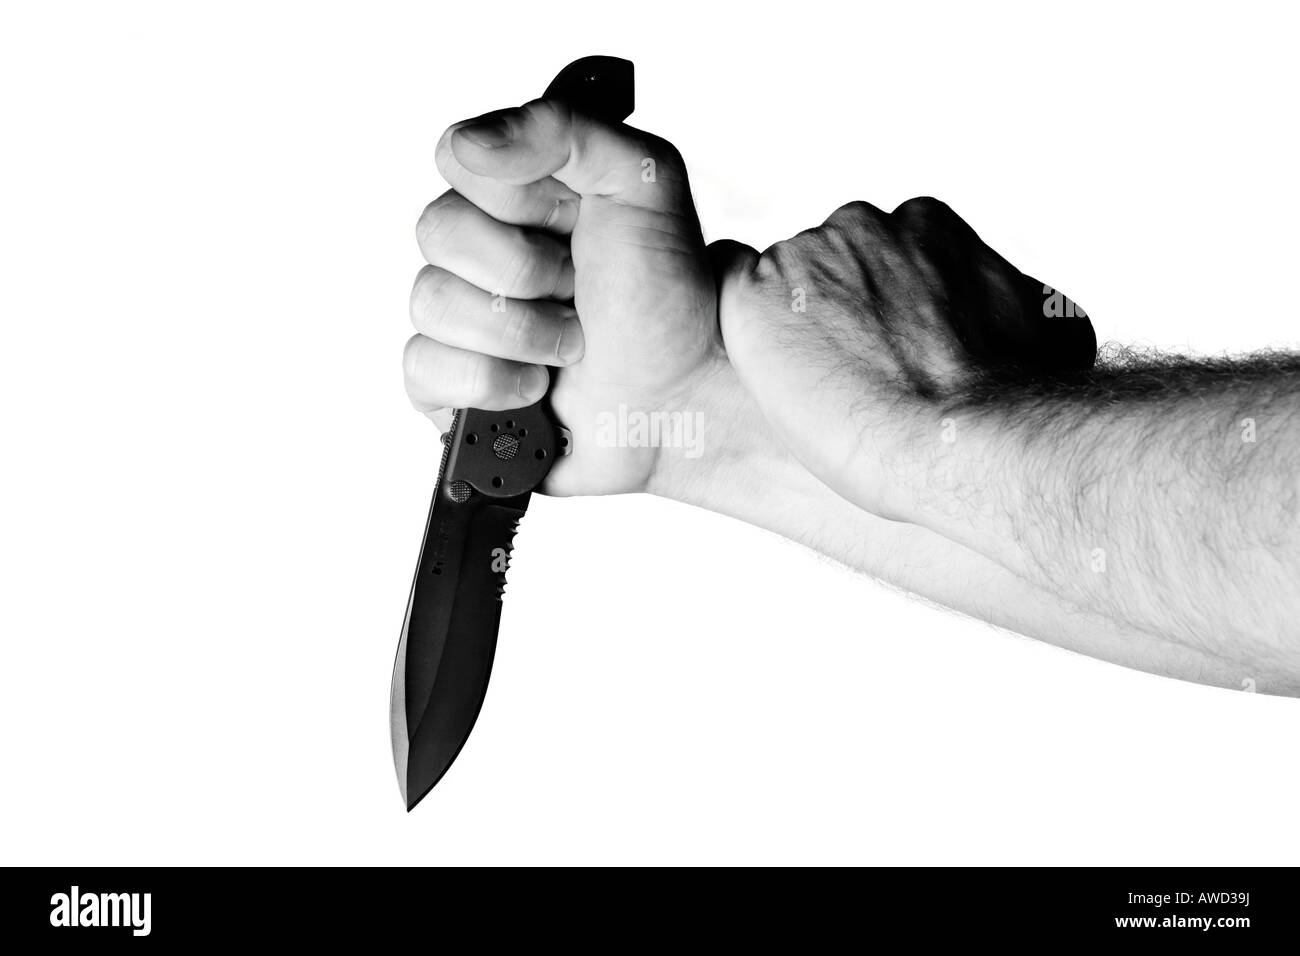 Hand making stabbing motion with jackknife Stock Photo